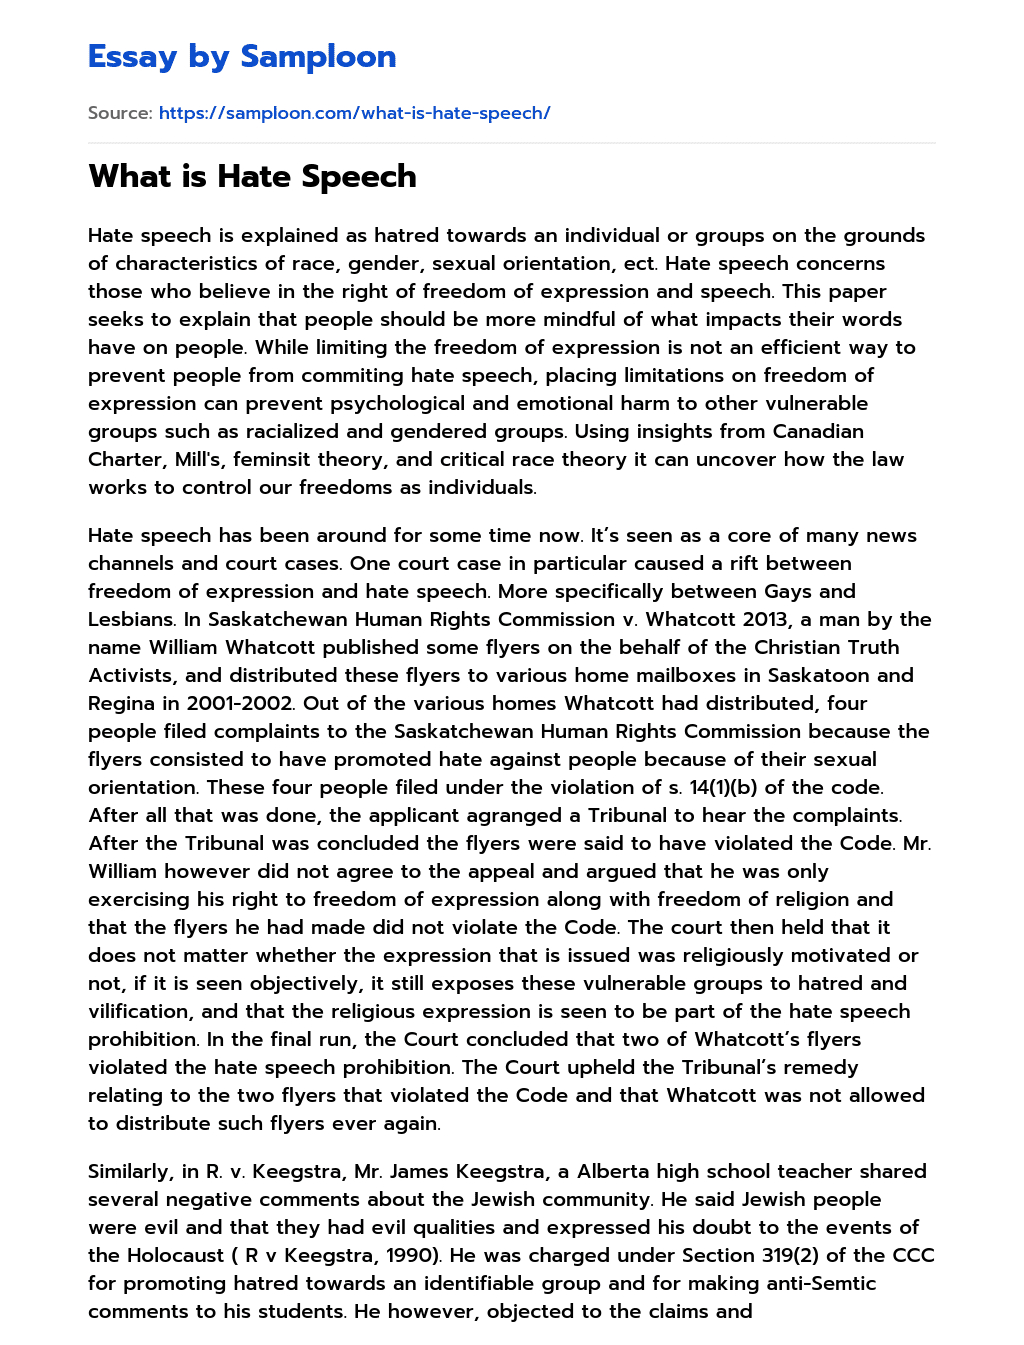 What is Hate Speech essay